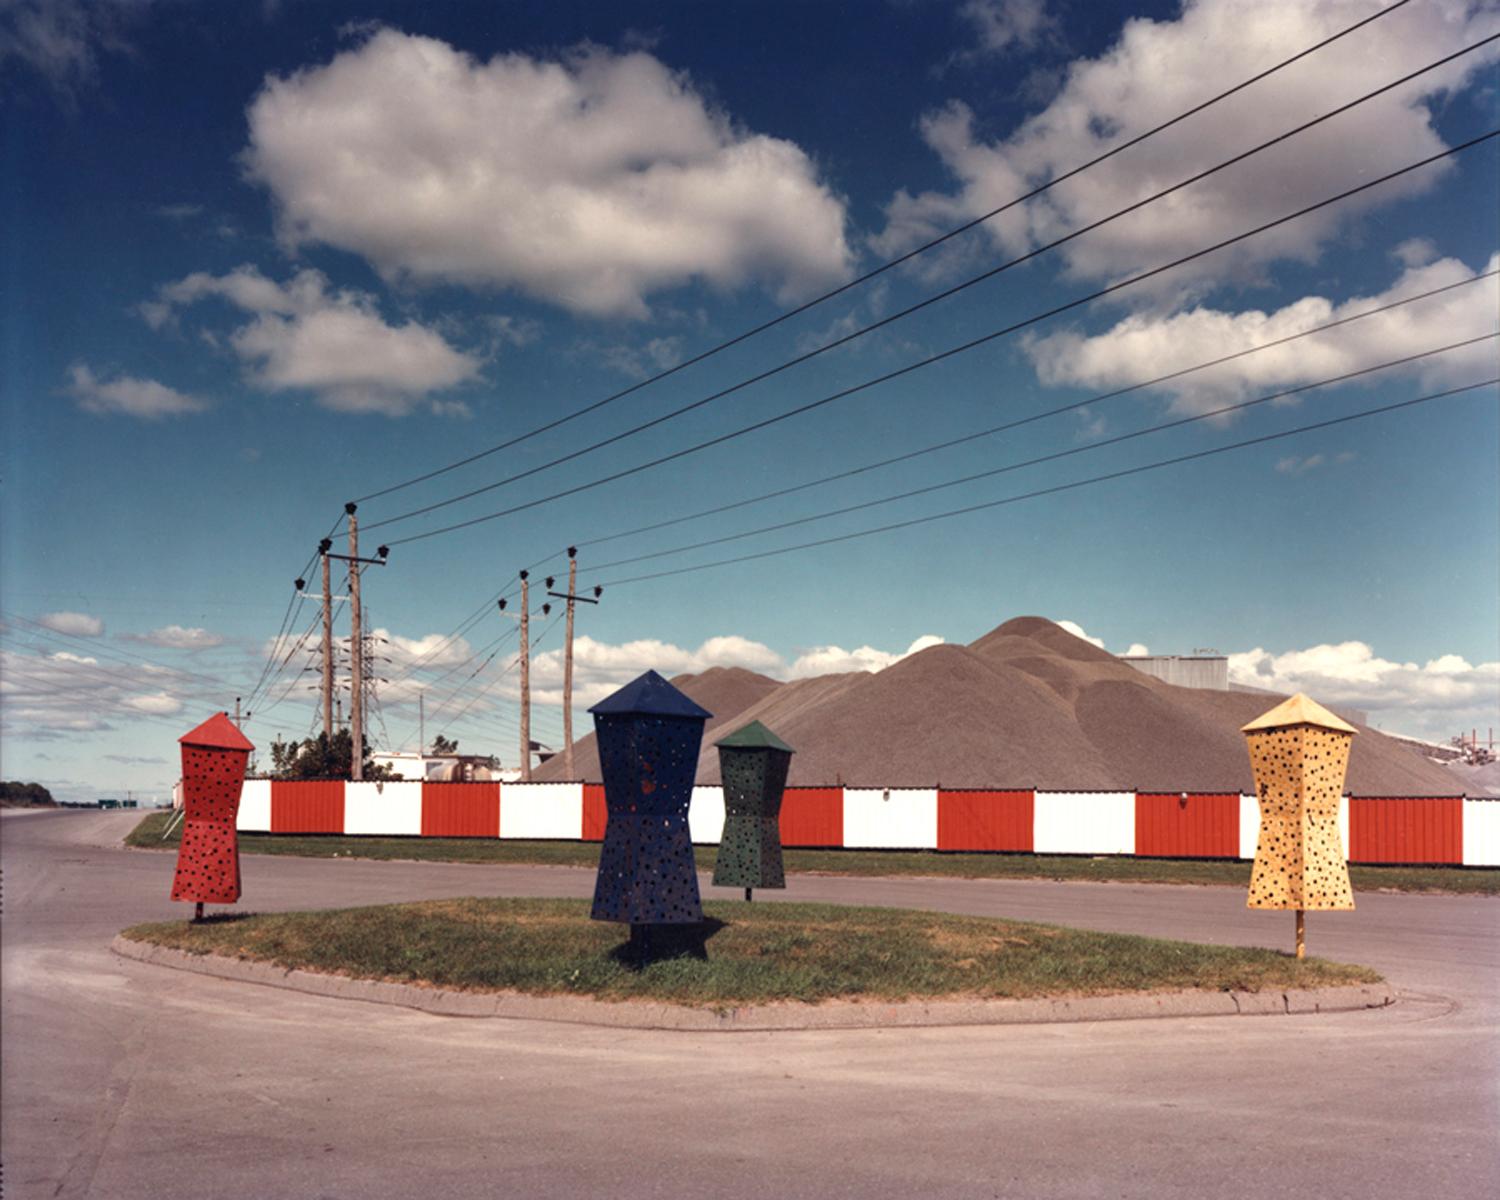 David Graham Color Photograph - St. Eustache, PQ 1982